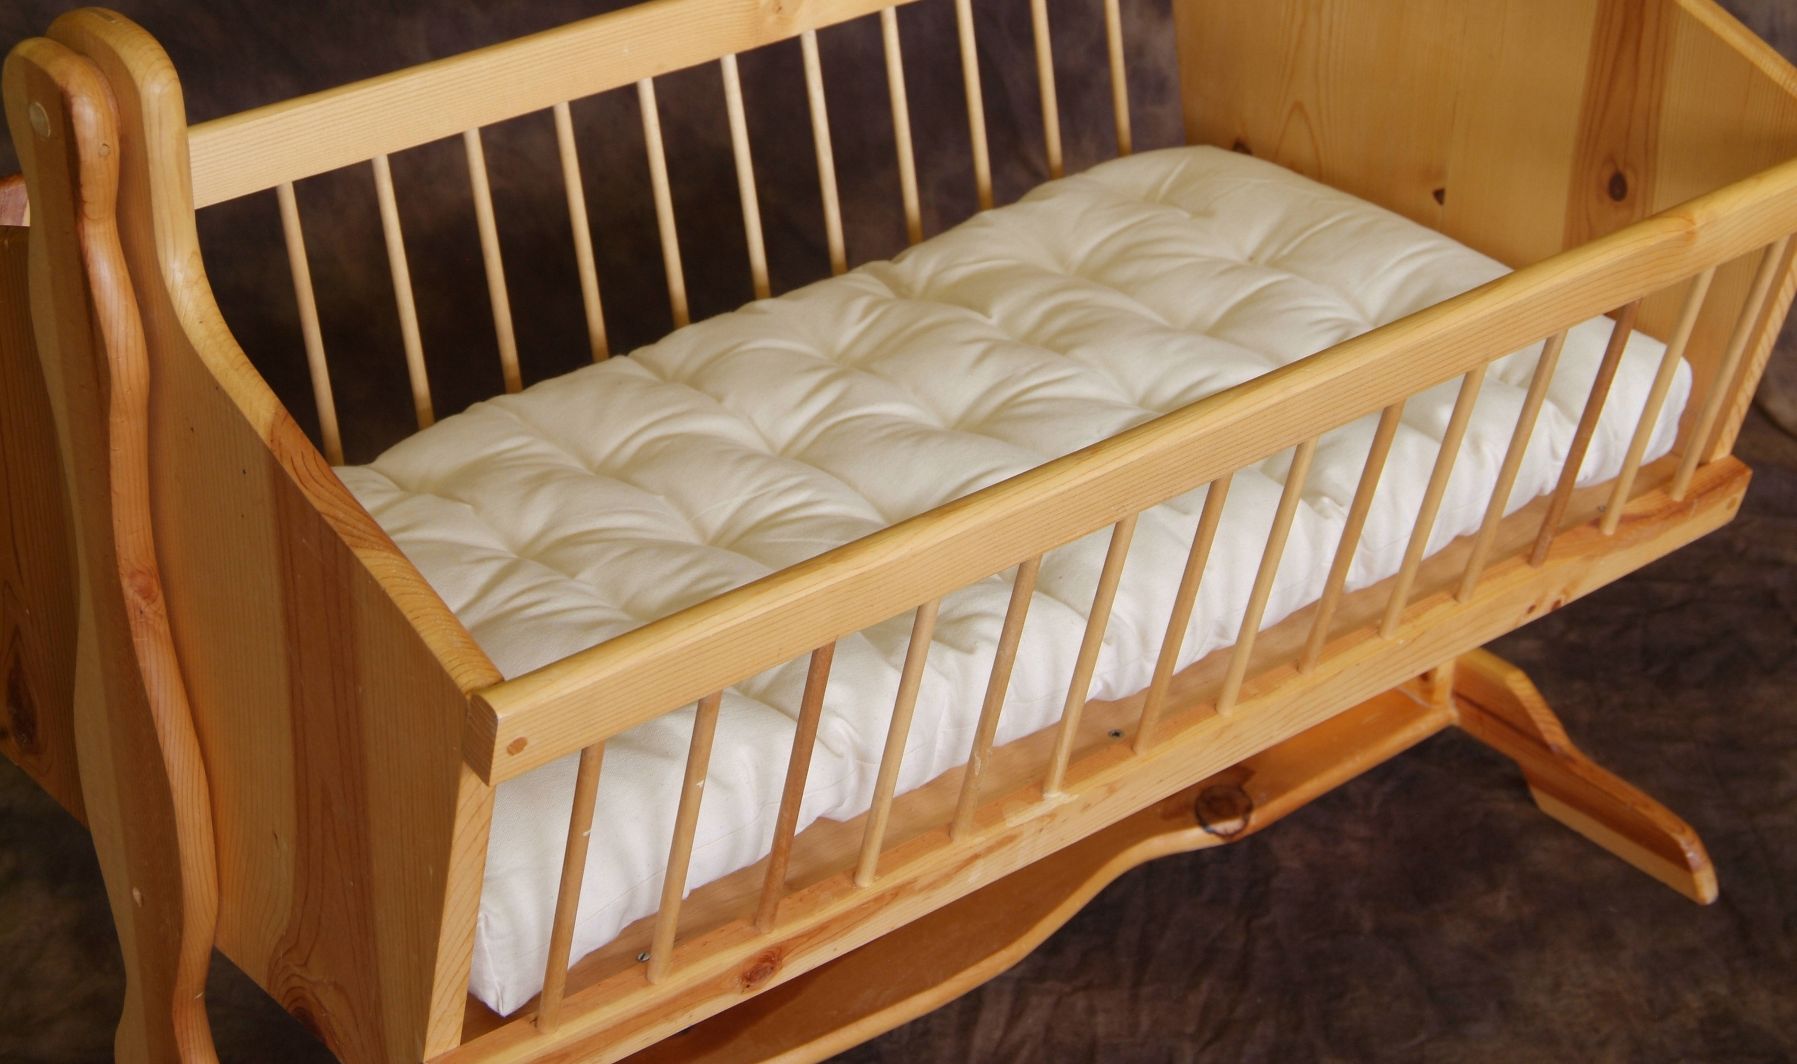 bassinet mattress pad cover